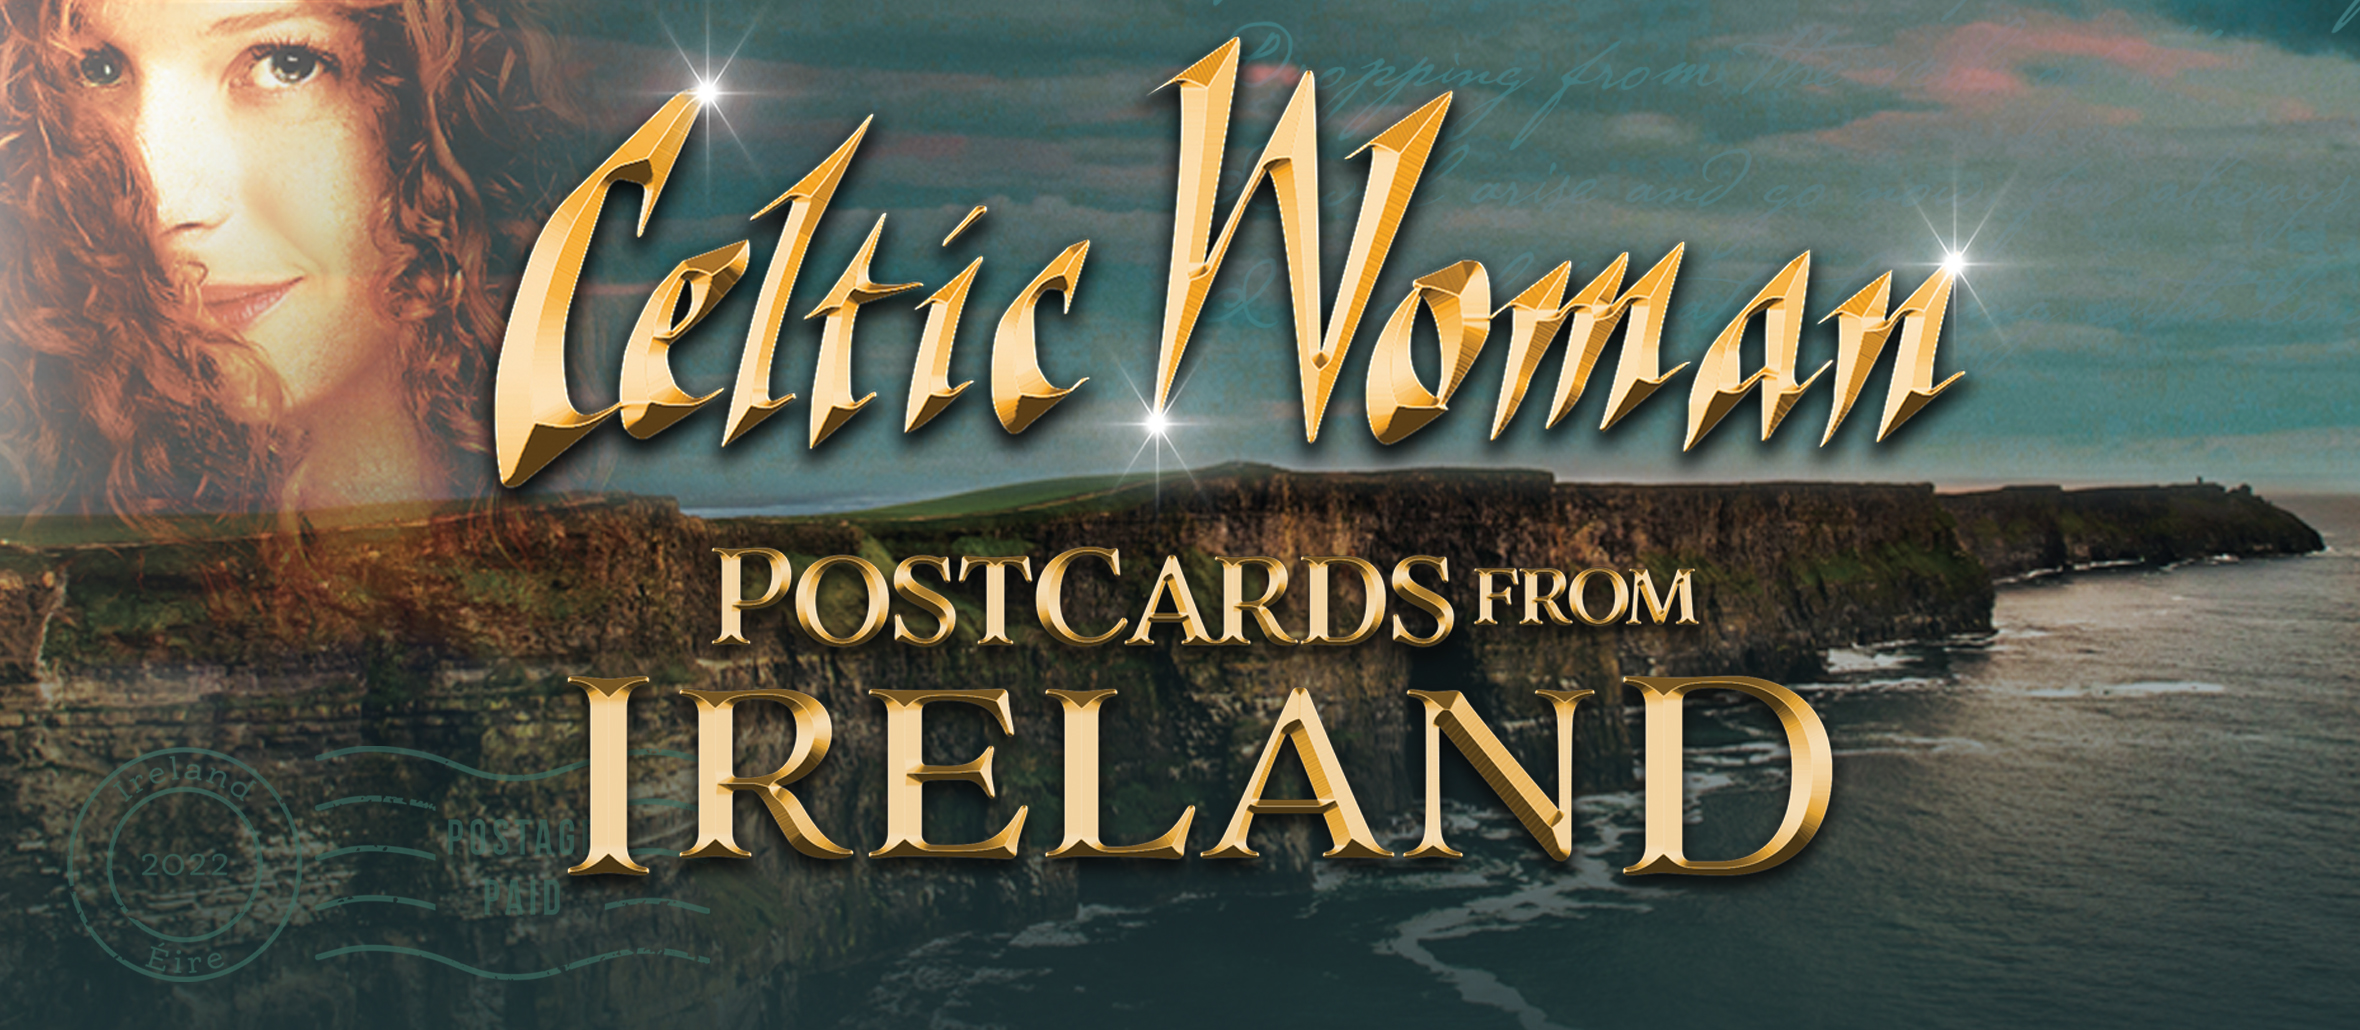 Celtic Woman promo image